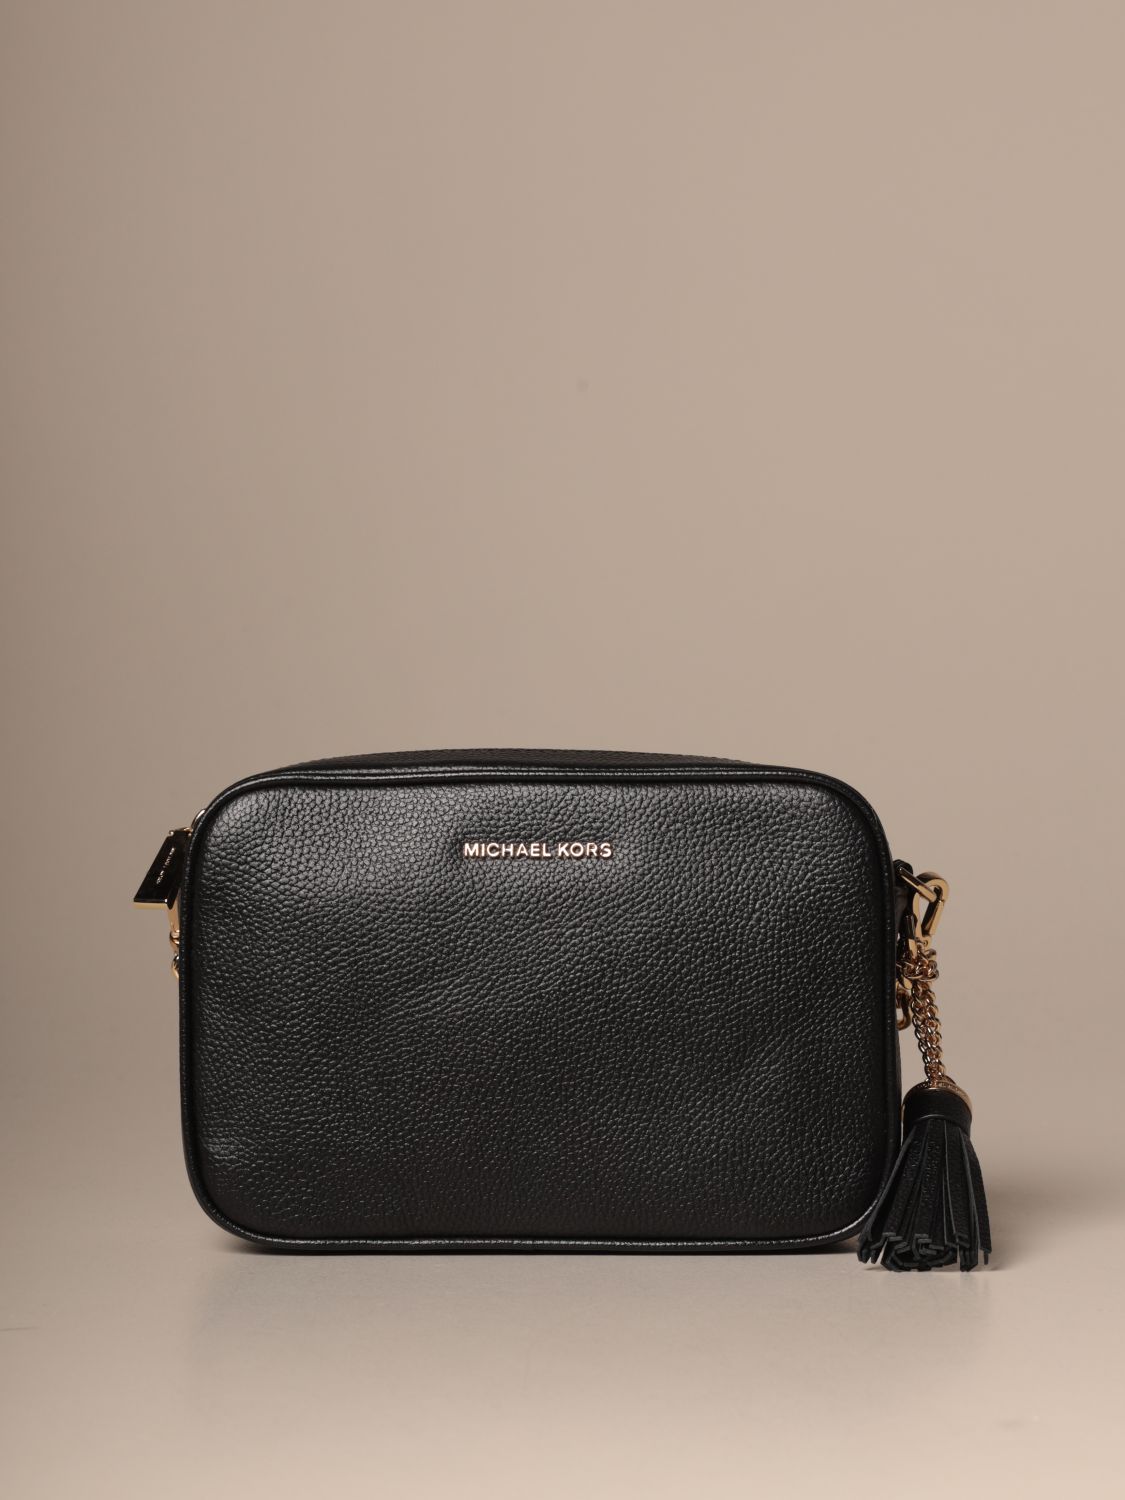 MICHAEL MICHAEL KORS: Ginny leather bag | Crossbody Bags Michael Michael Kors Women Black 